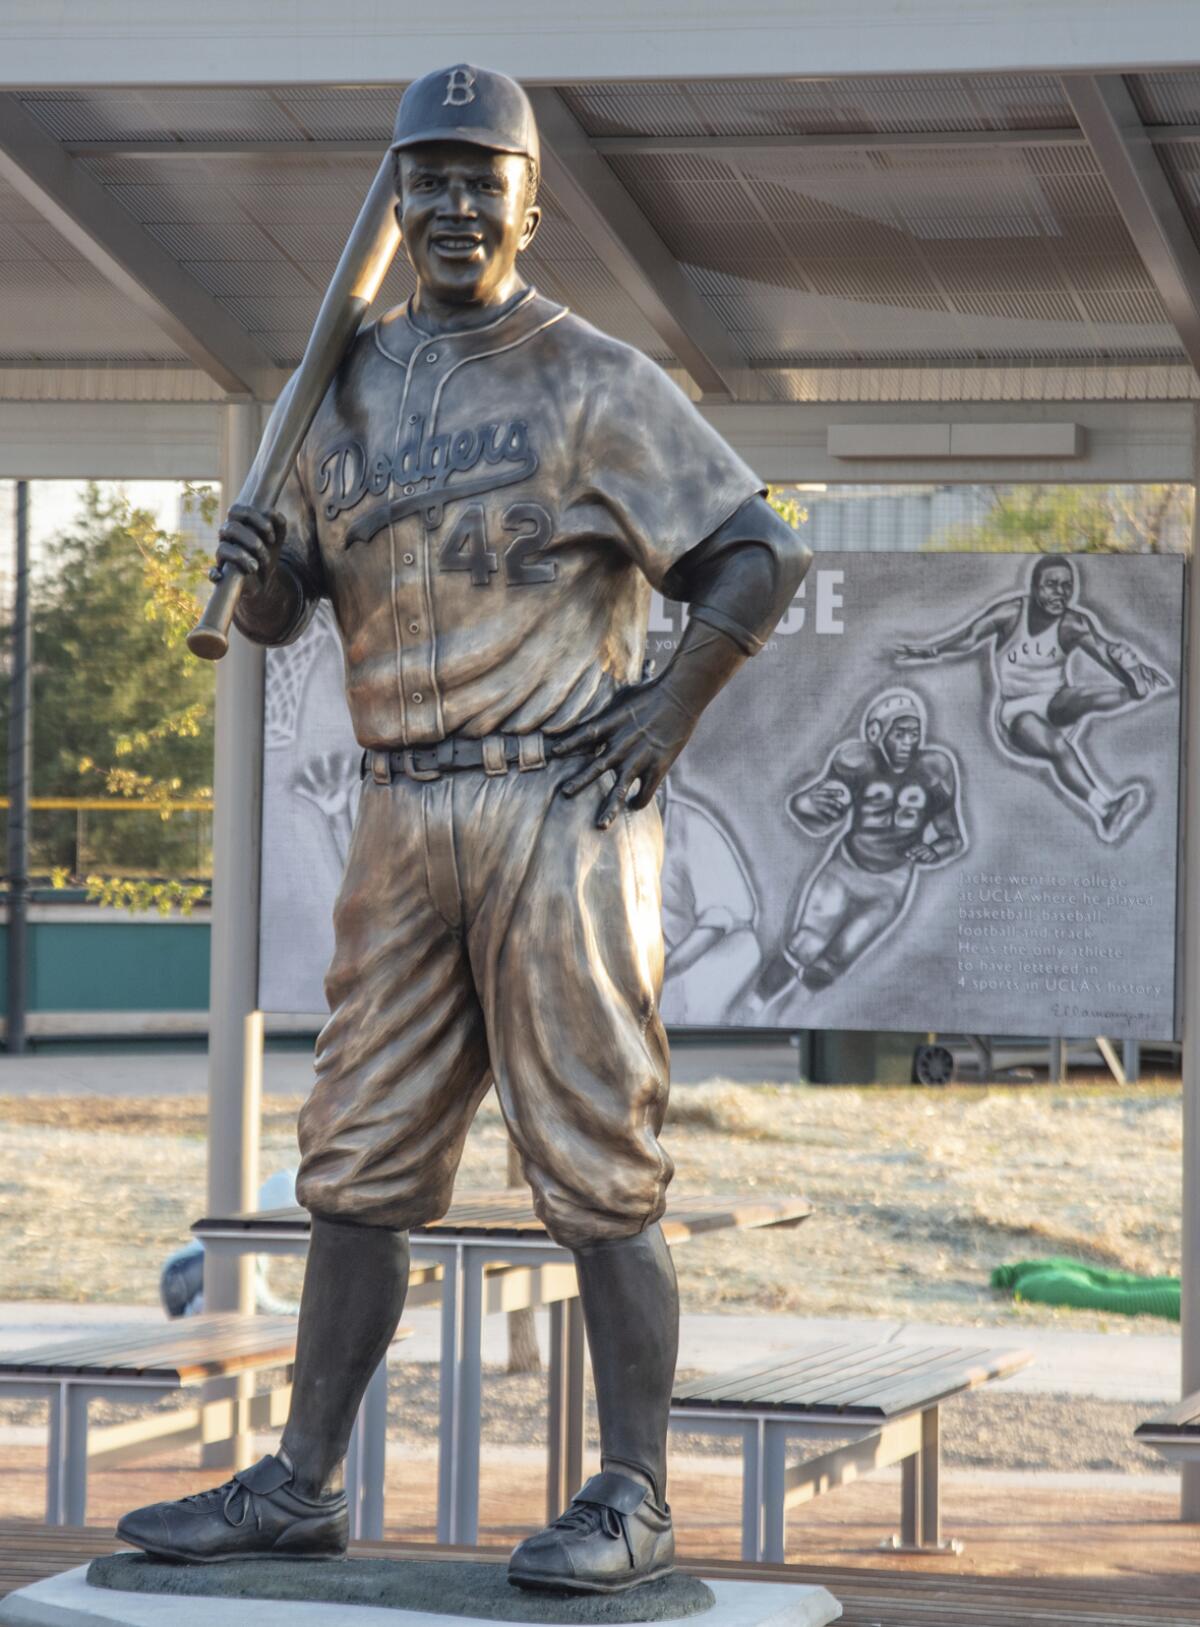 A statue of baseball legend Jackie Robinson at Wichita's McAdams Park.